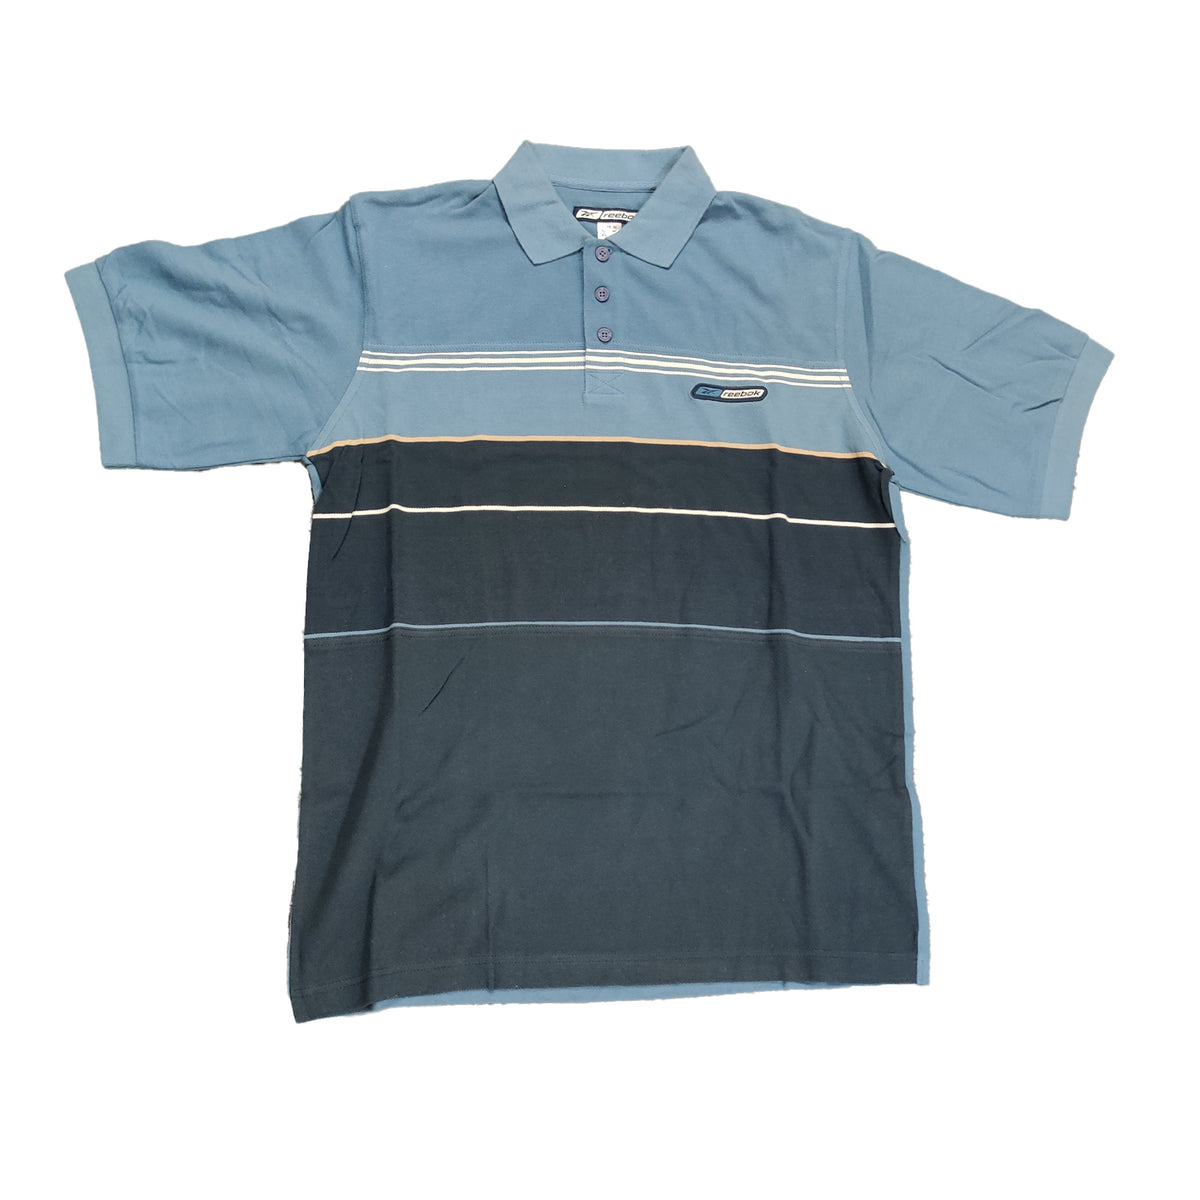 Reebok Mens Clearance Blue Contrast Striped Polo Shirt - Medium